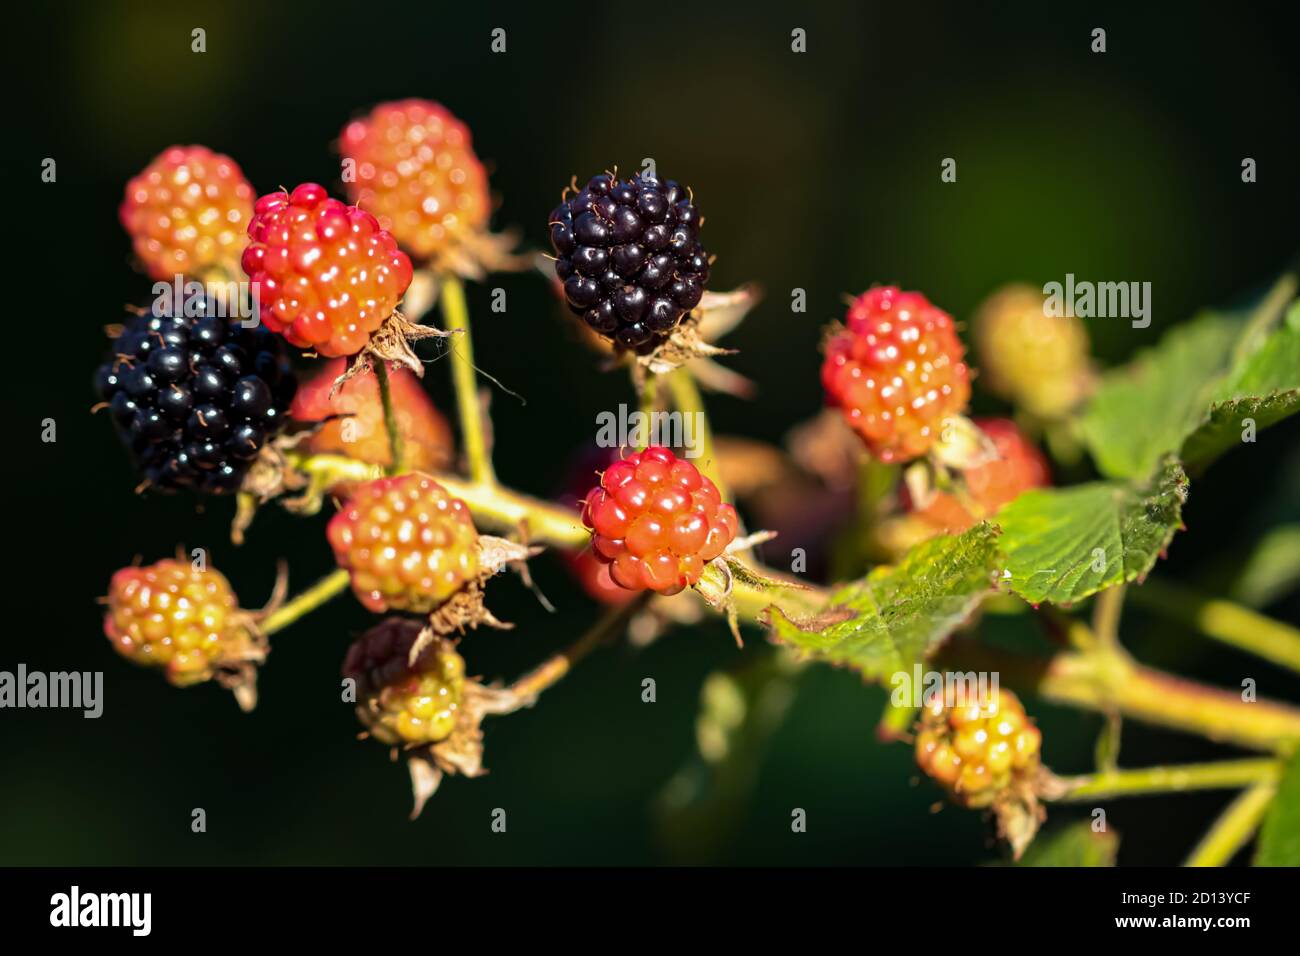 Close-up of ripening Blackberry branch on dark background horizontal orientation Stock Photo